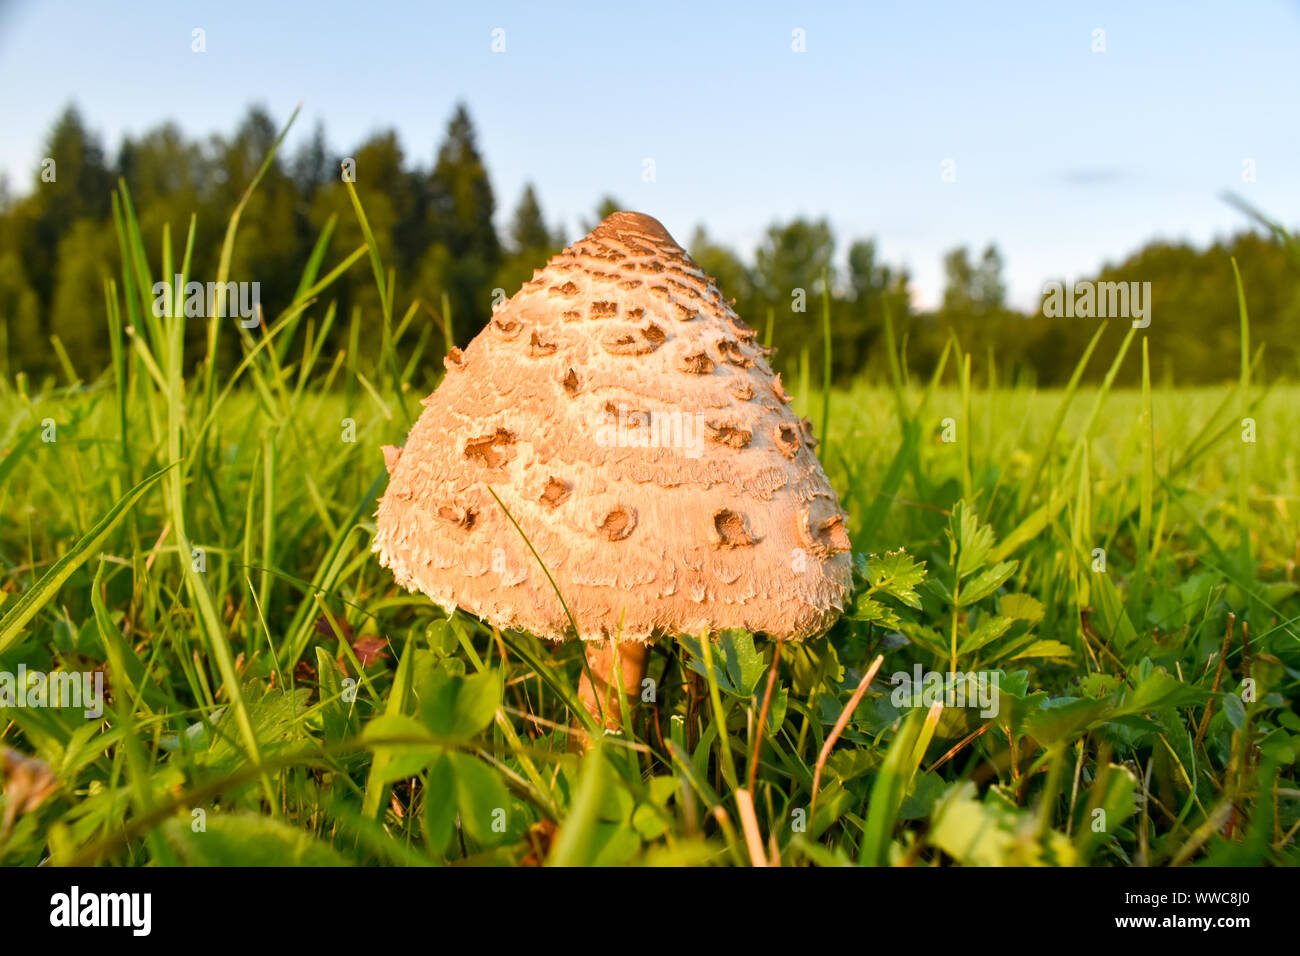 The young parasol (Macrolepiota procera or Lepiota procera) mushroom. Stock Photo